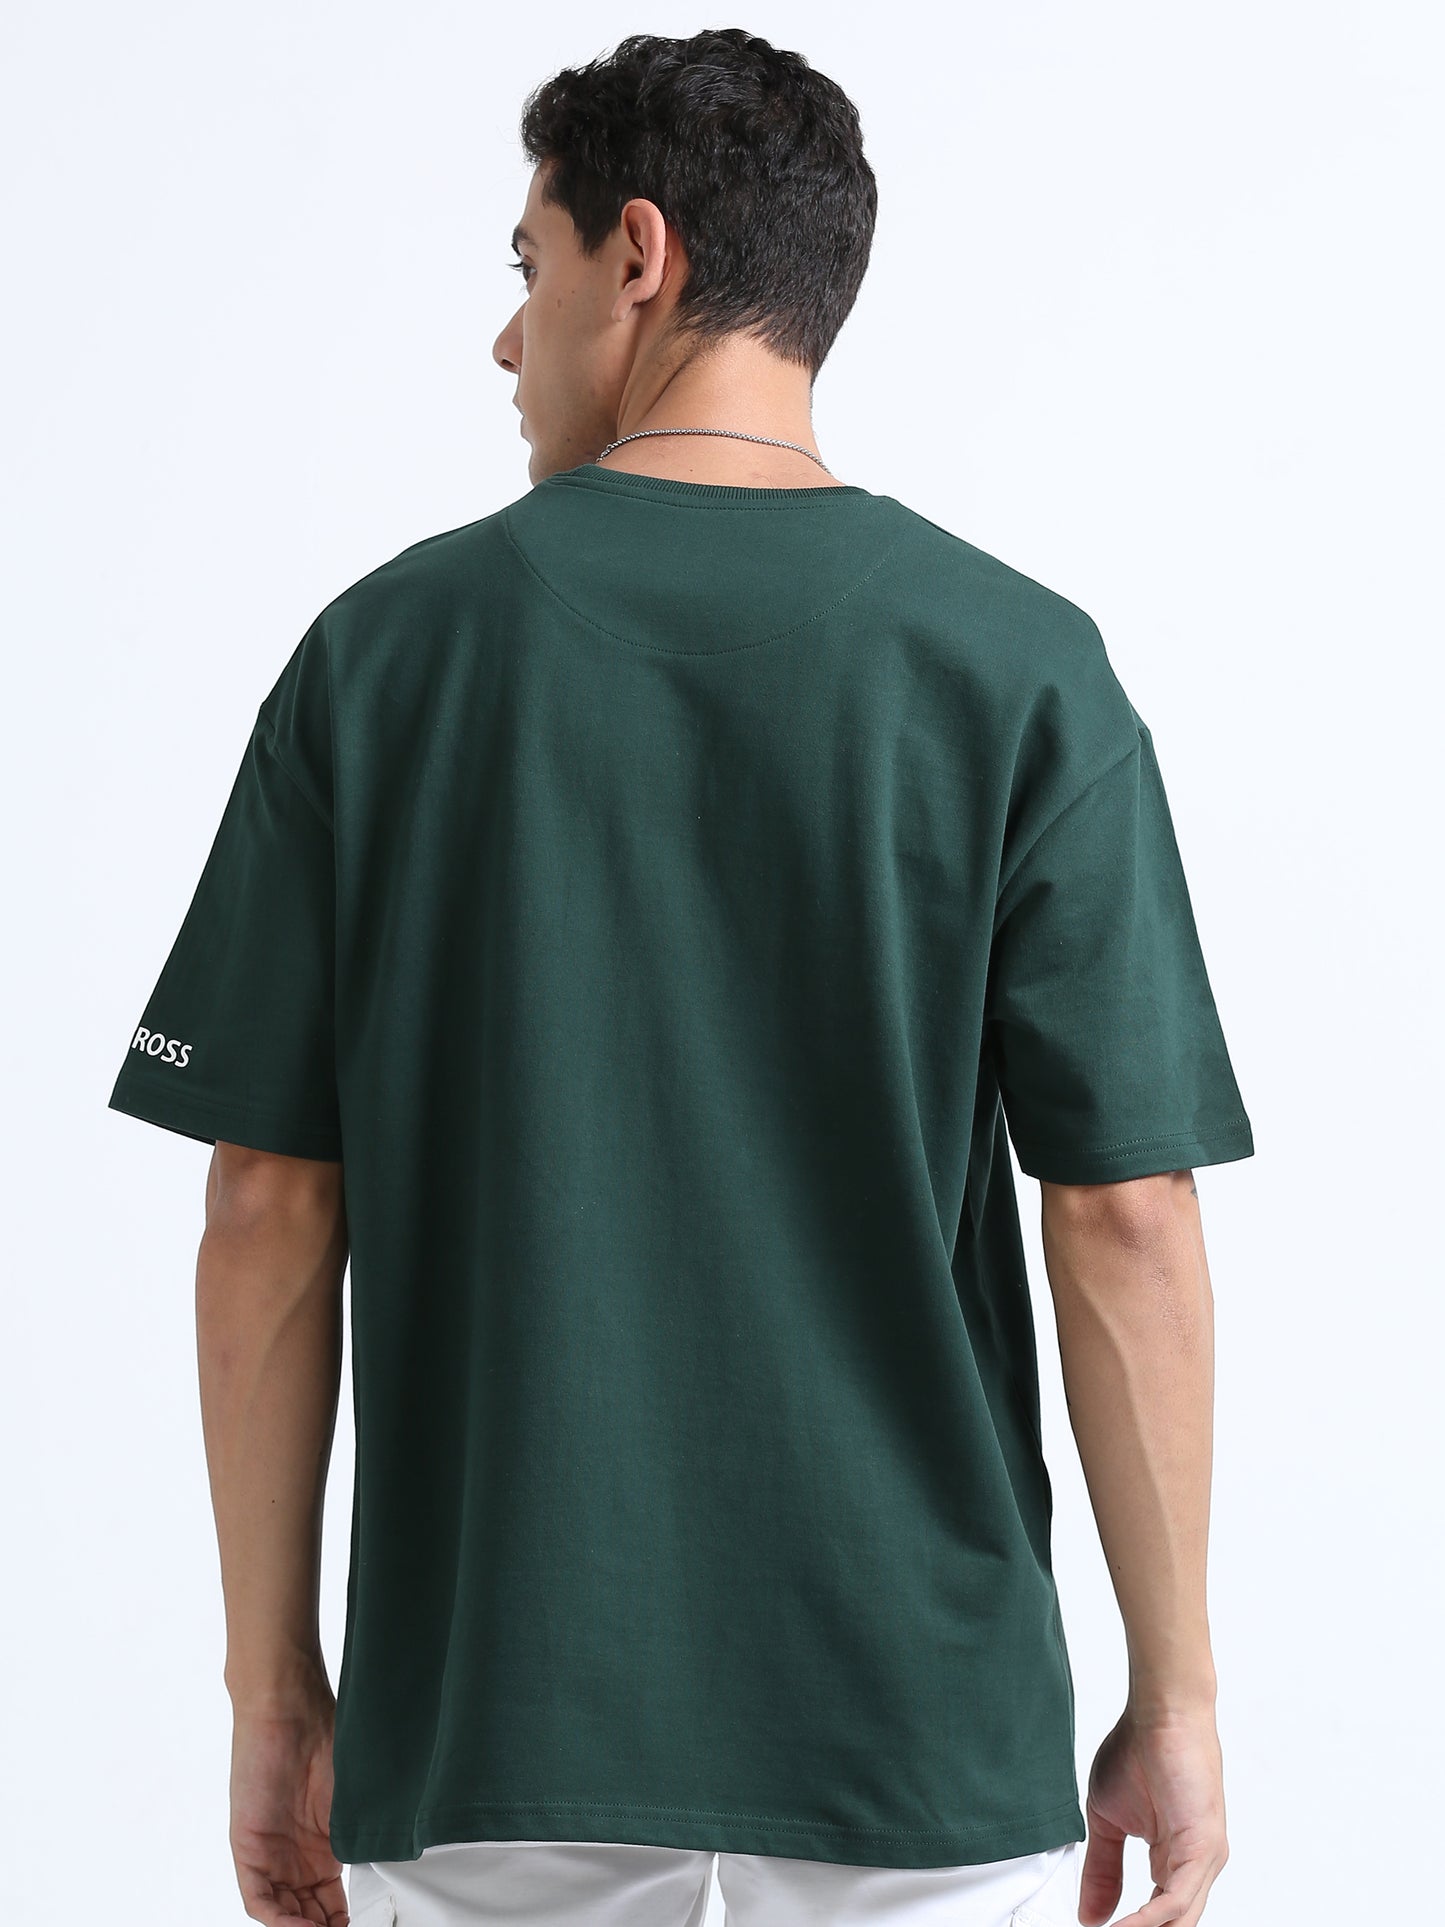 Premium Thick Oversized T-shirts - ALBATROSS